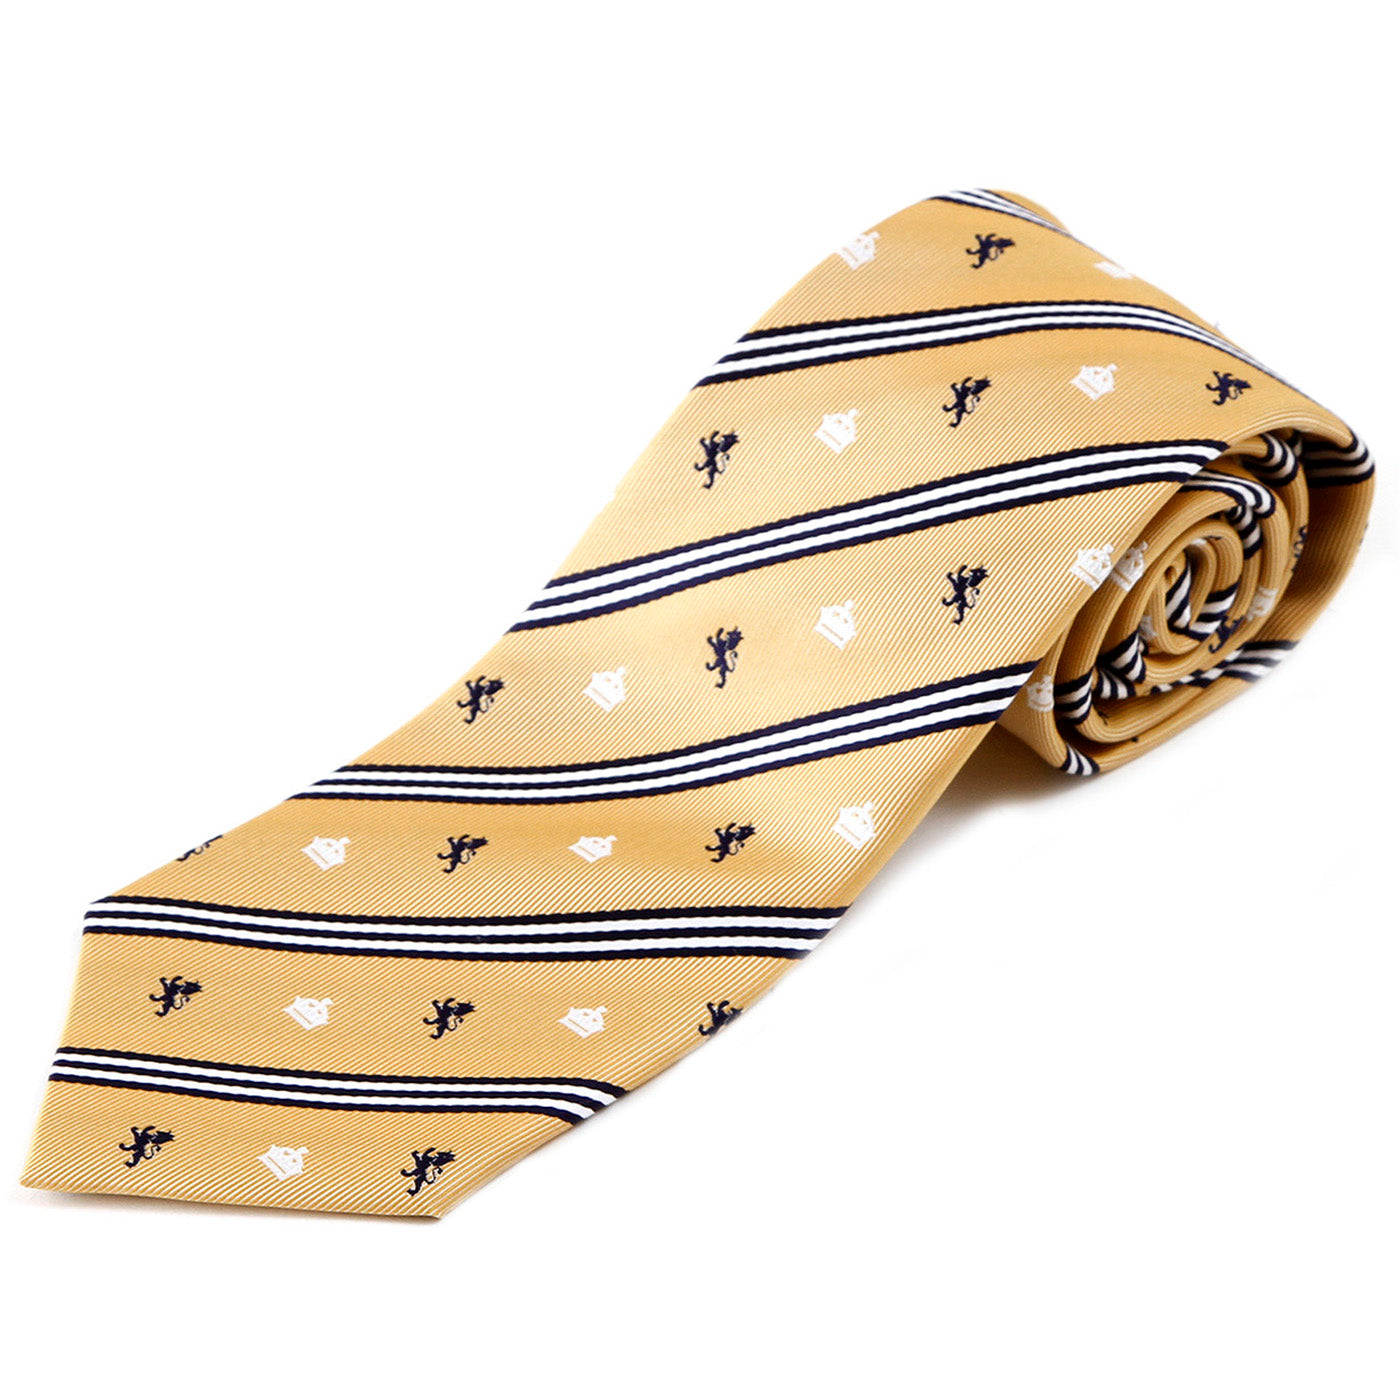 Men’s Jacquard Woven 100% Nishijin Kyoto Silk Tie -08. King Lion Crown Striped Pattern Made in Japan FORTUNA Tokyo